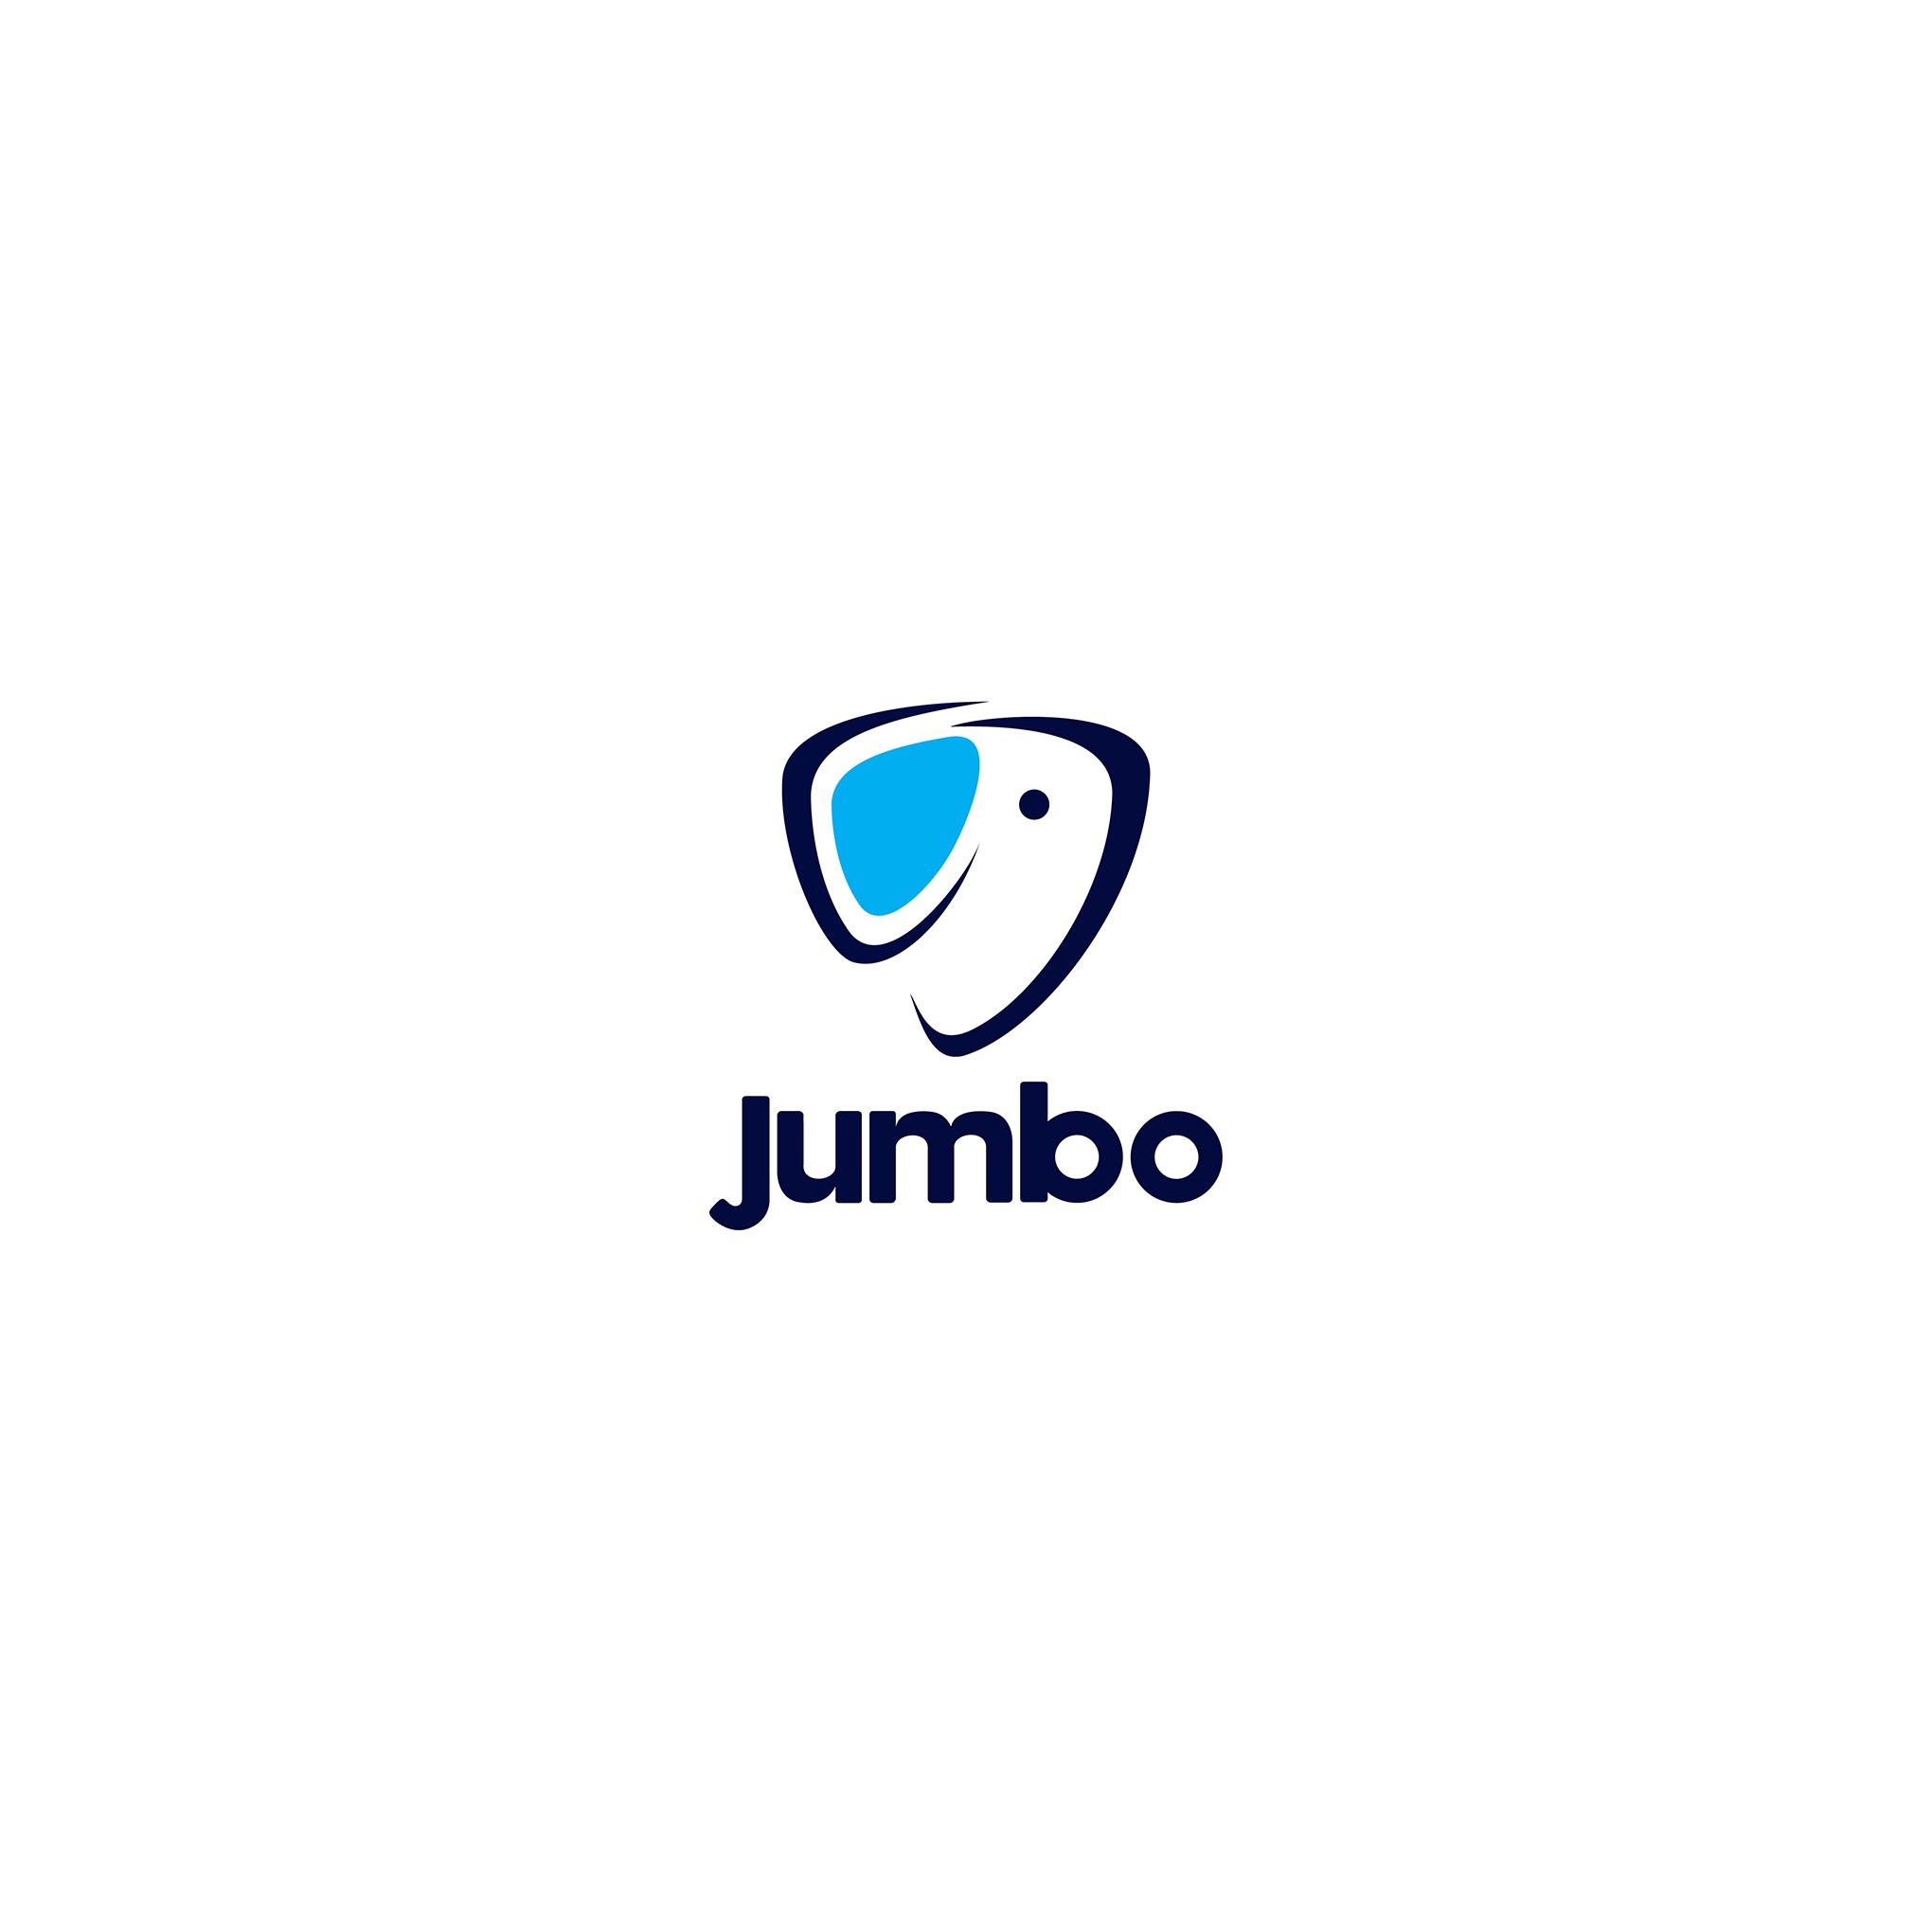 Jumbo branding graphic design logo